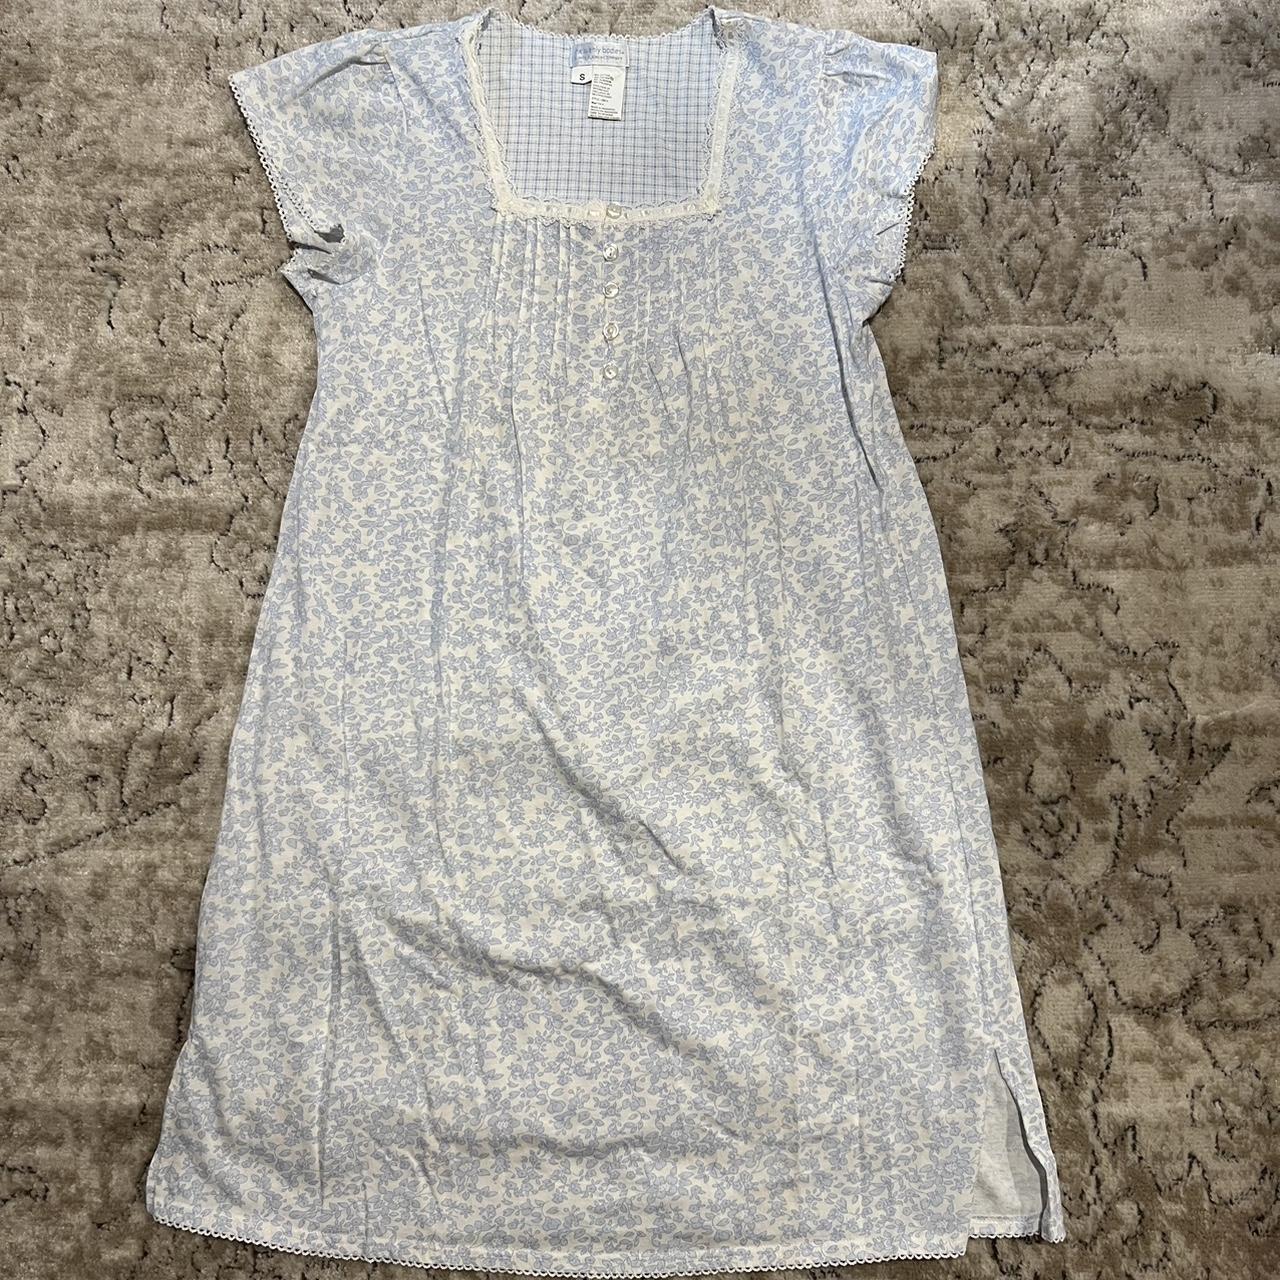 Women's Blue and White Dress | Depop